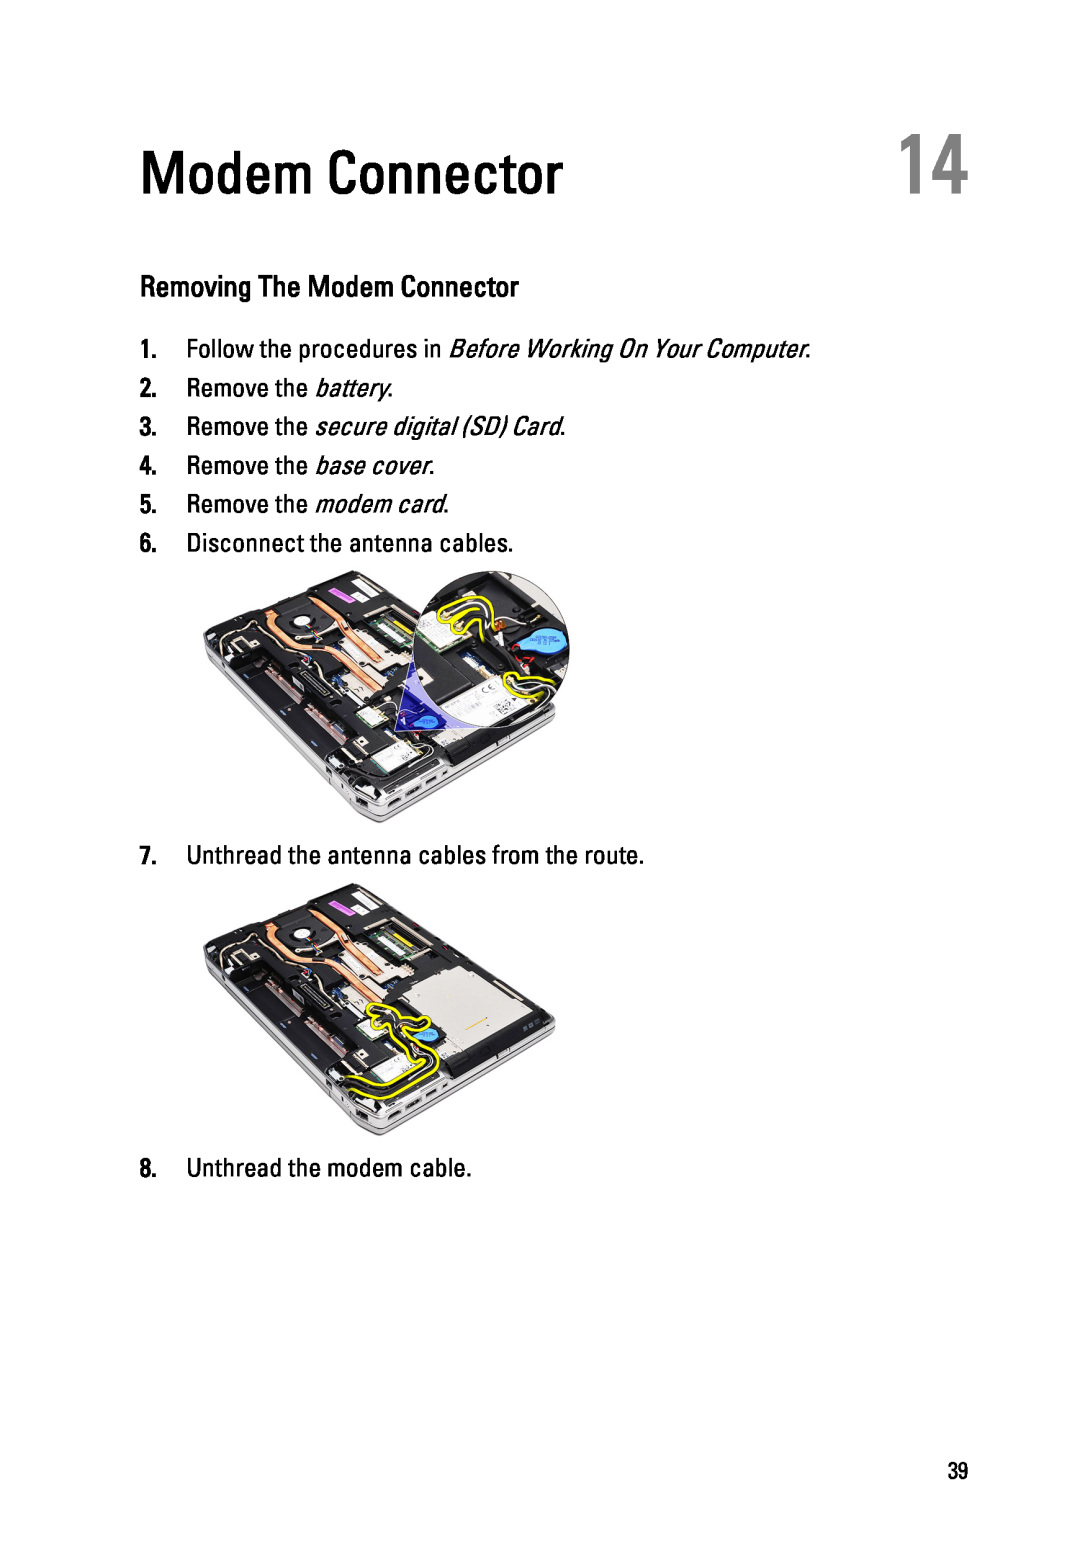 Dell E6520 Removing The Modem Connector, Remove the base cover 5. Remove the modem card, Disconnect the antenna cables 